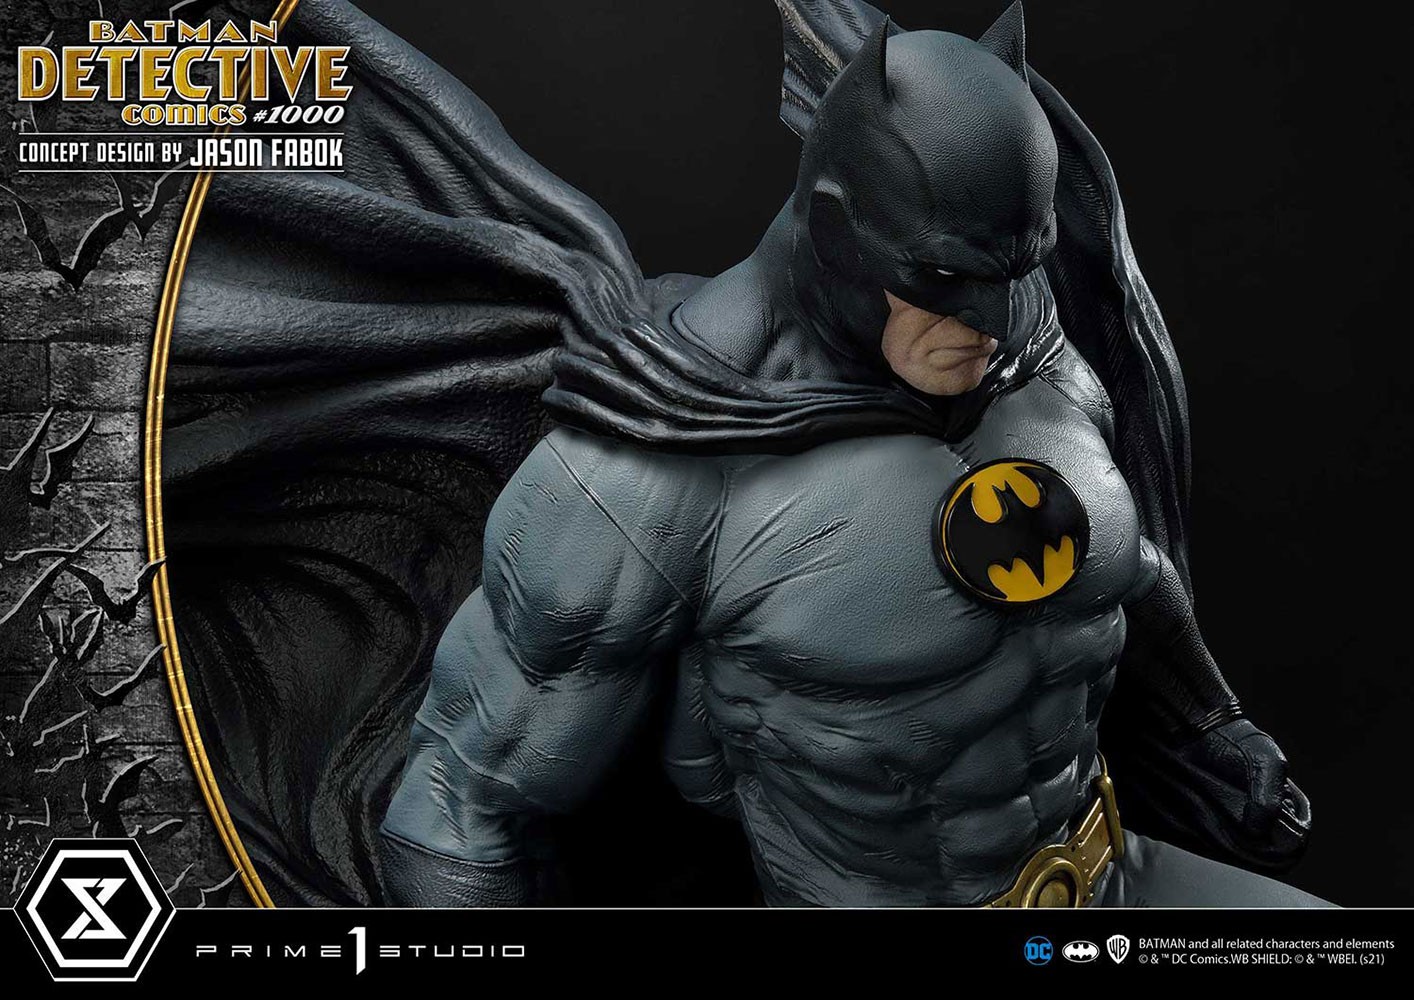 Batman Detective Comics #1000 Collector Edition (Prototype Shown) View 44